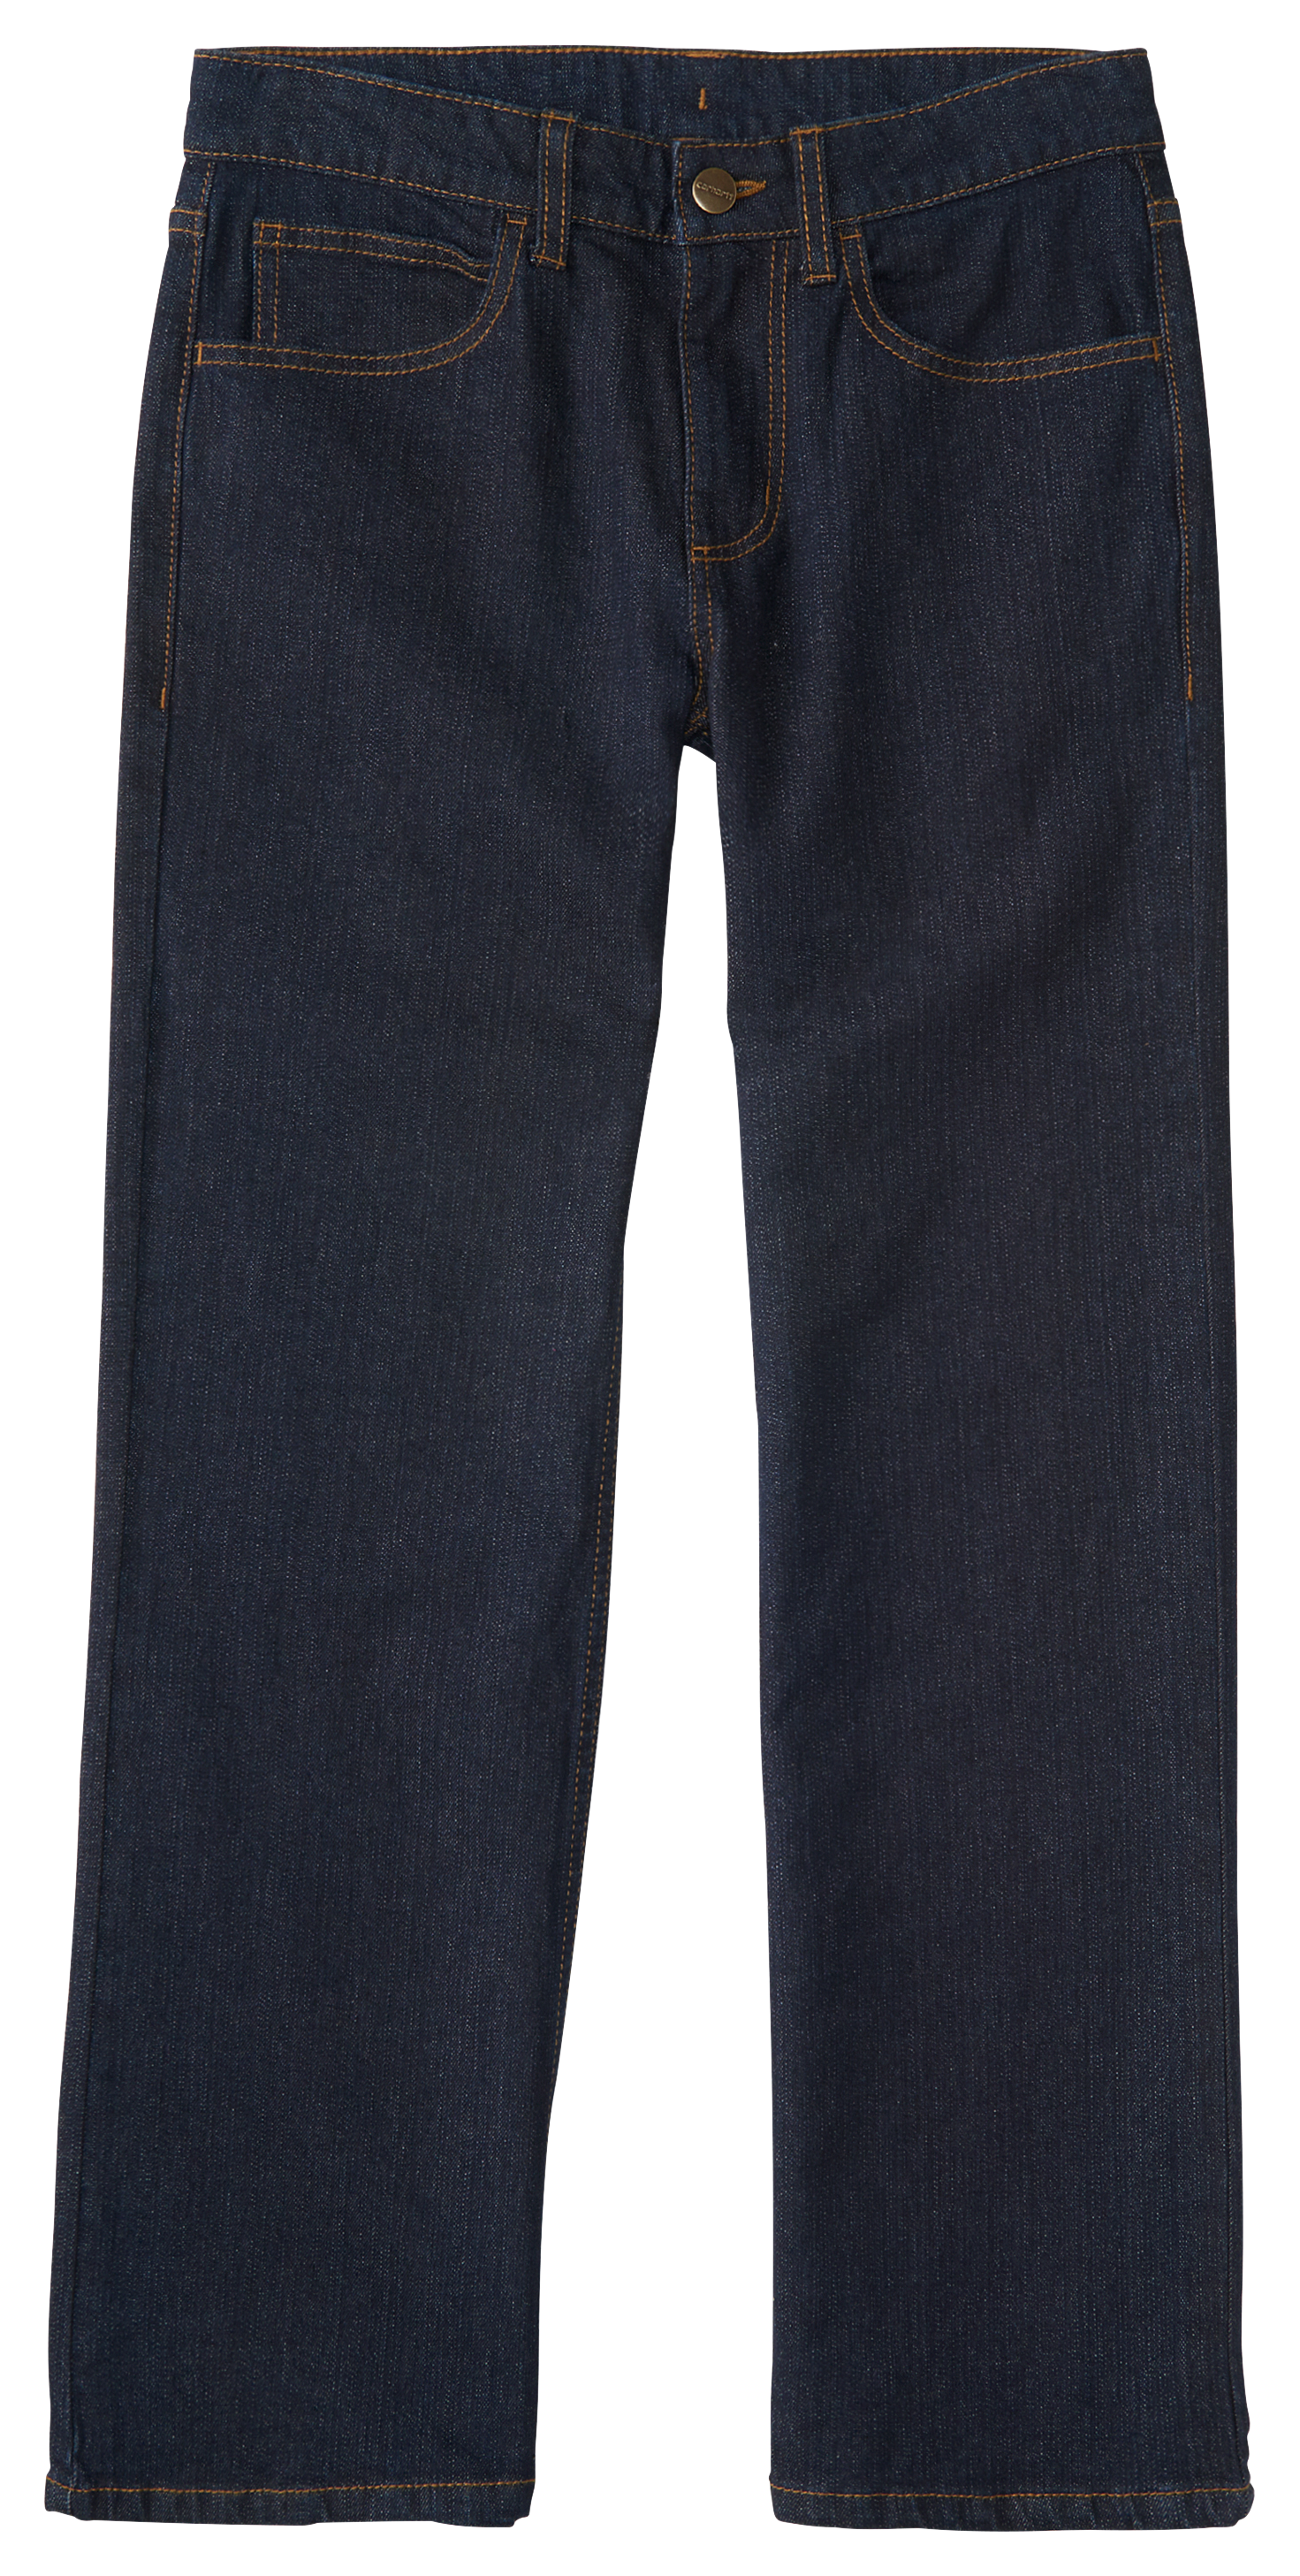 Carhartt Denim 5-Pocket Jeans for Kids | Bass Pro Shops